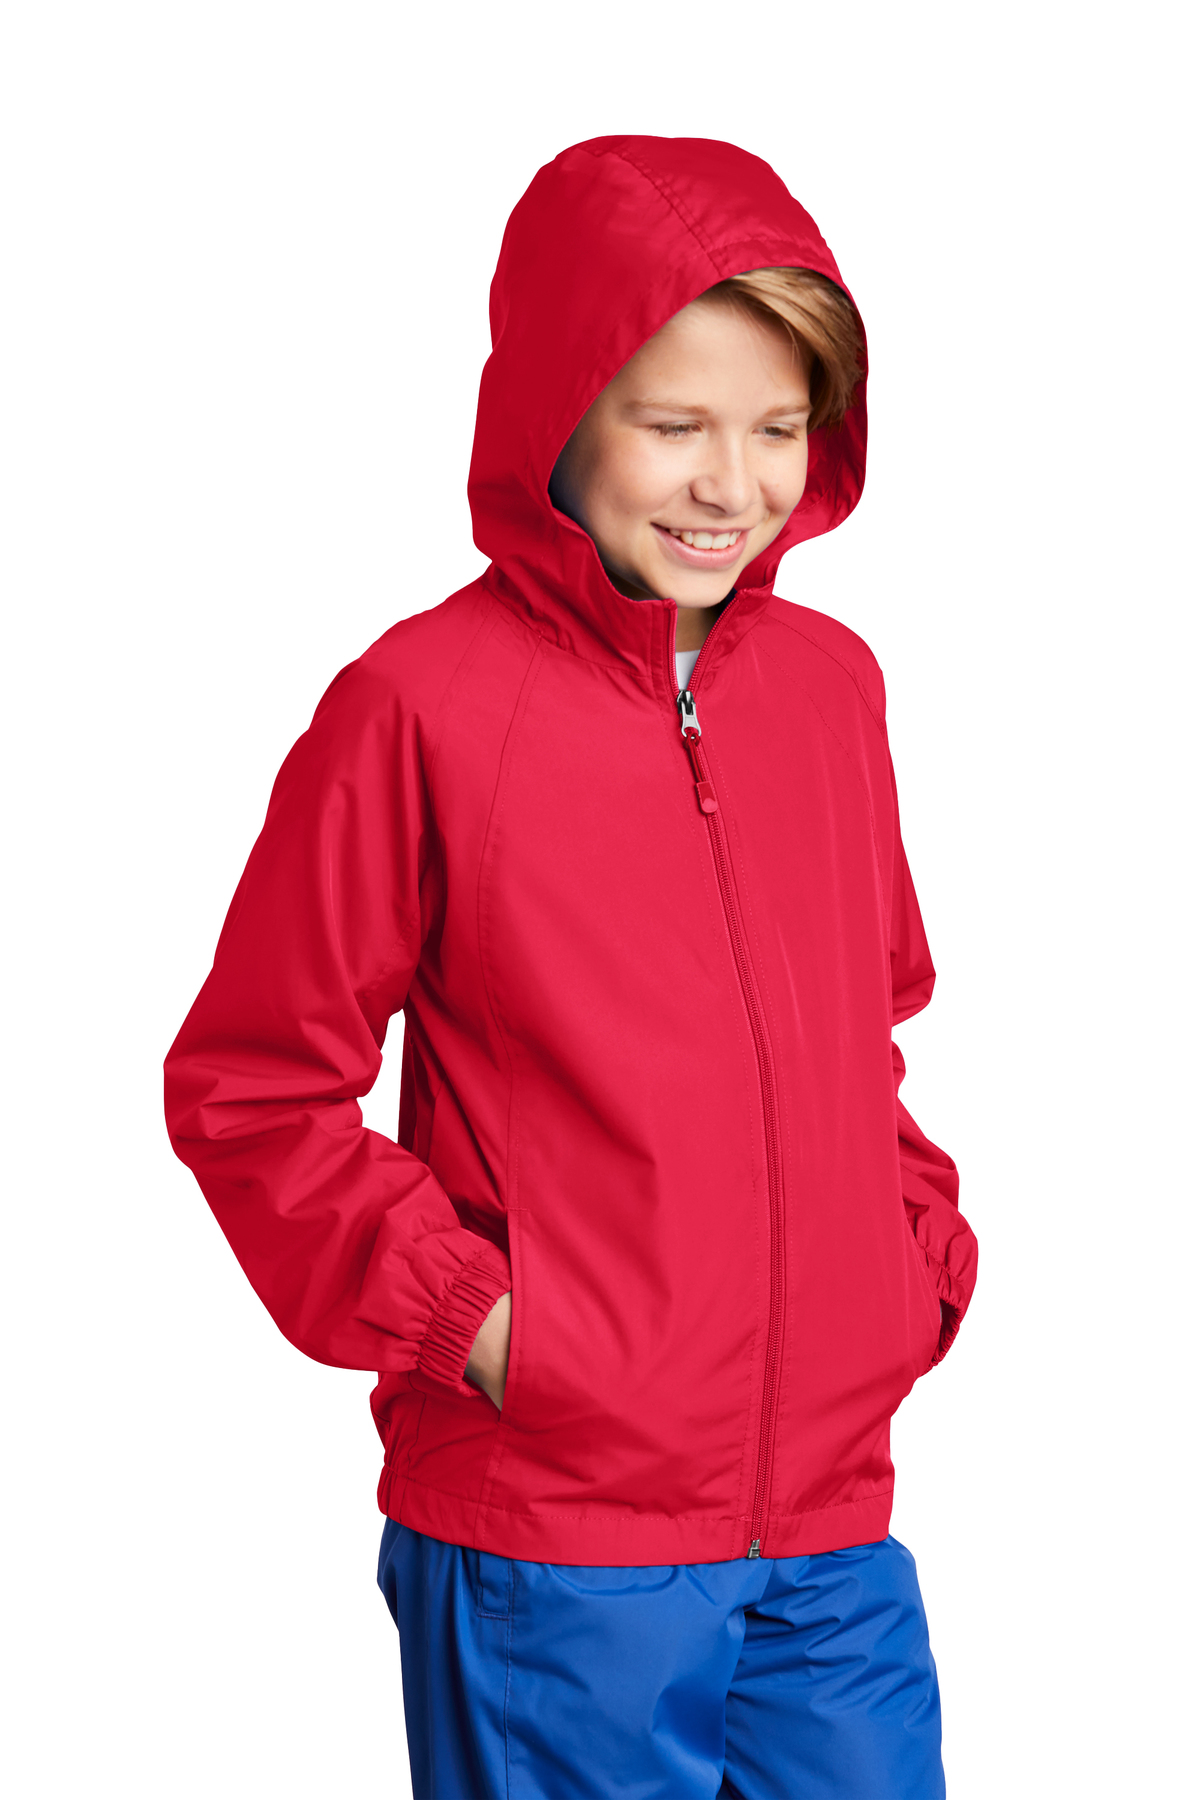 Sport-Tek Youth Hooded Raglan Jacket | Product | Sport-Tek